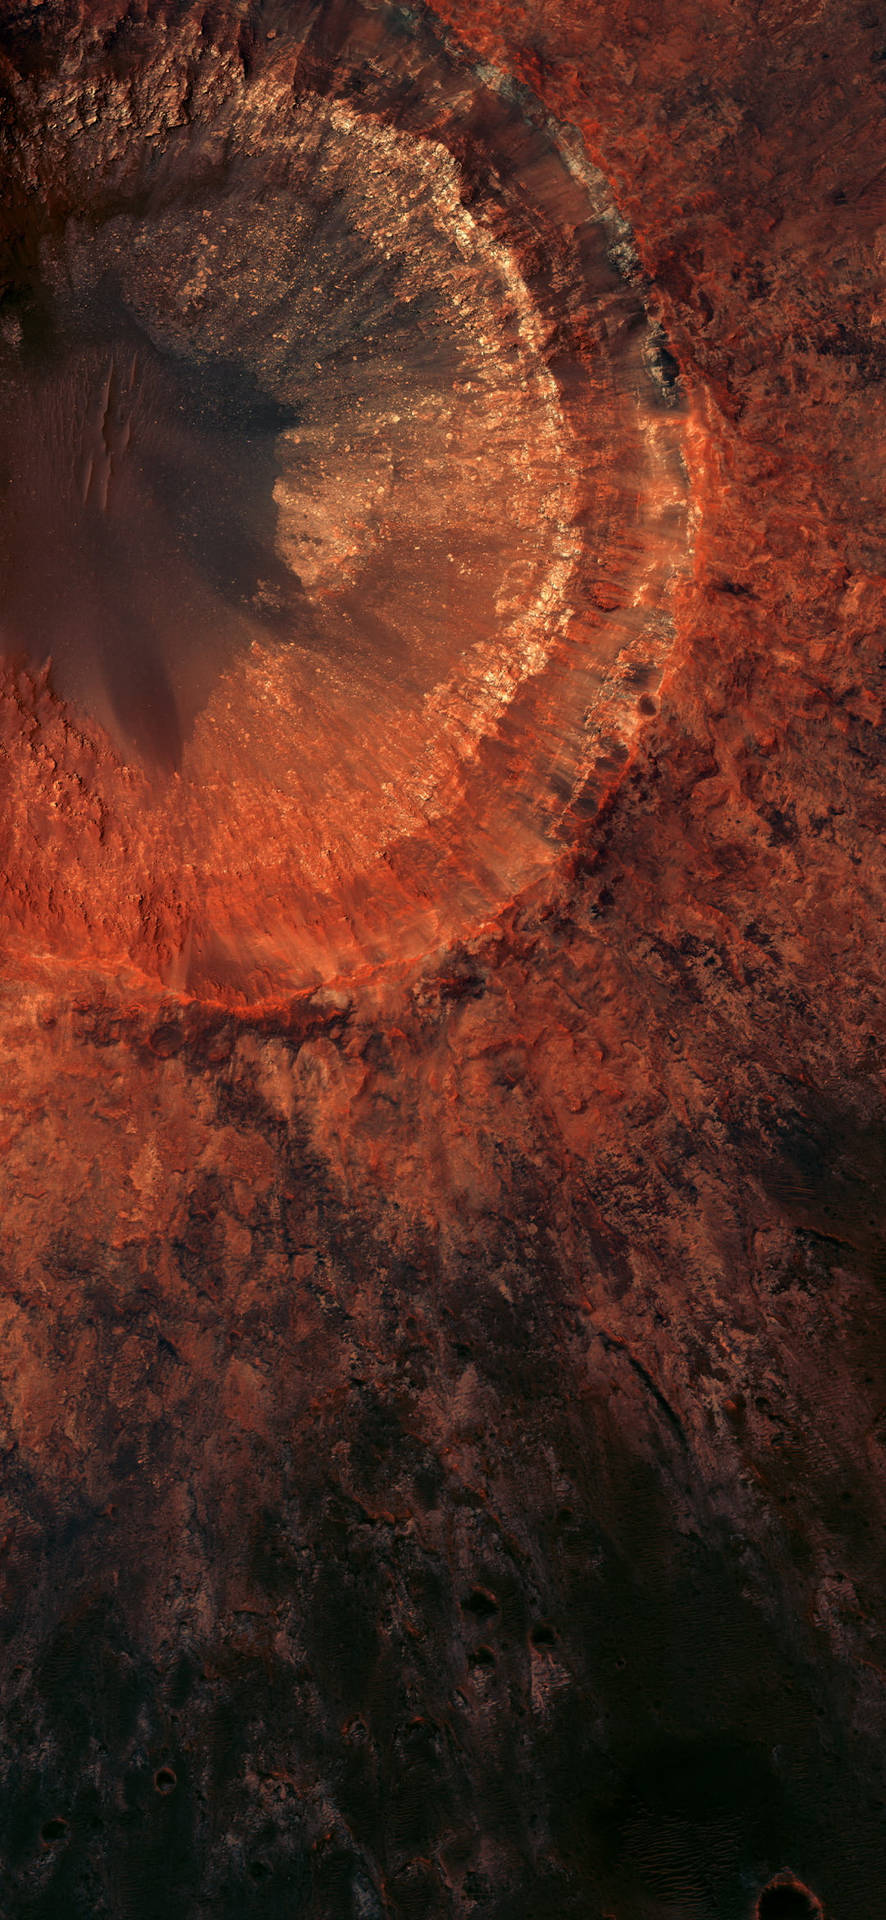 POCO X2 Meteor Crater Wallpaper